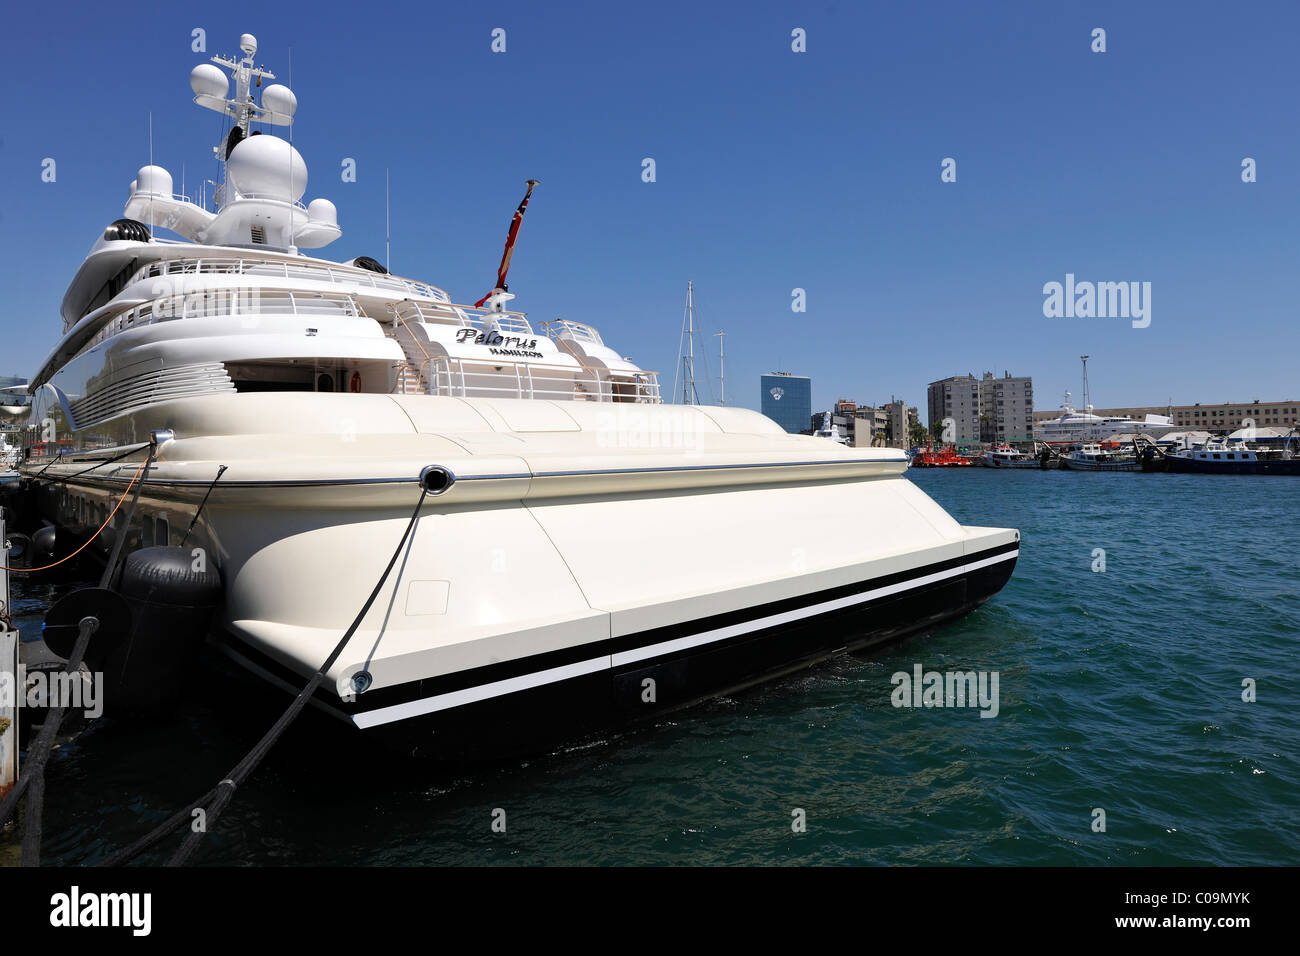 Roman ABRAMOVICH's luxury yacht PELORUS Hamilton in Port Vell, Barcelona, Catalonia, Spain, Europa Stock Photo